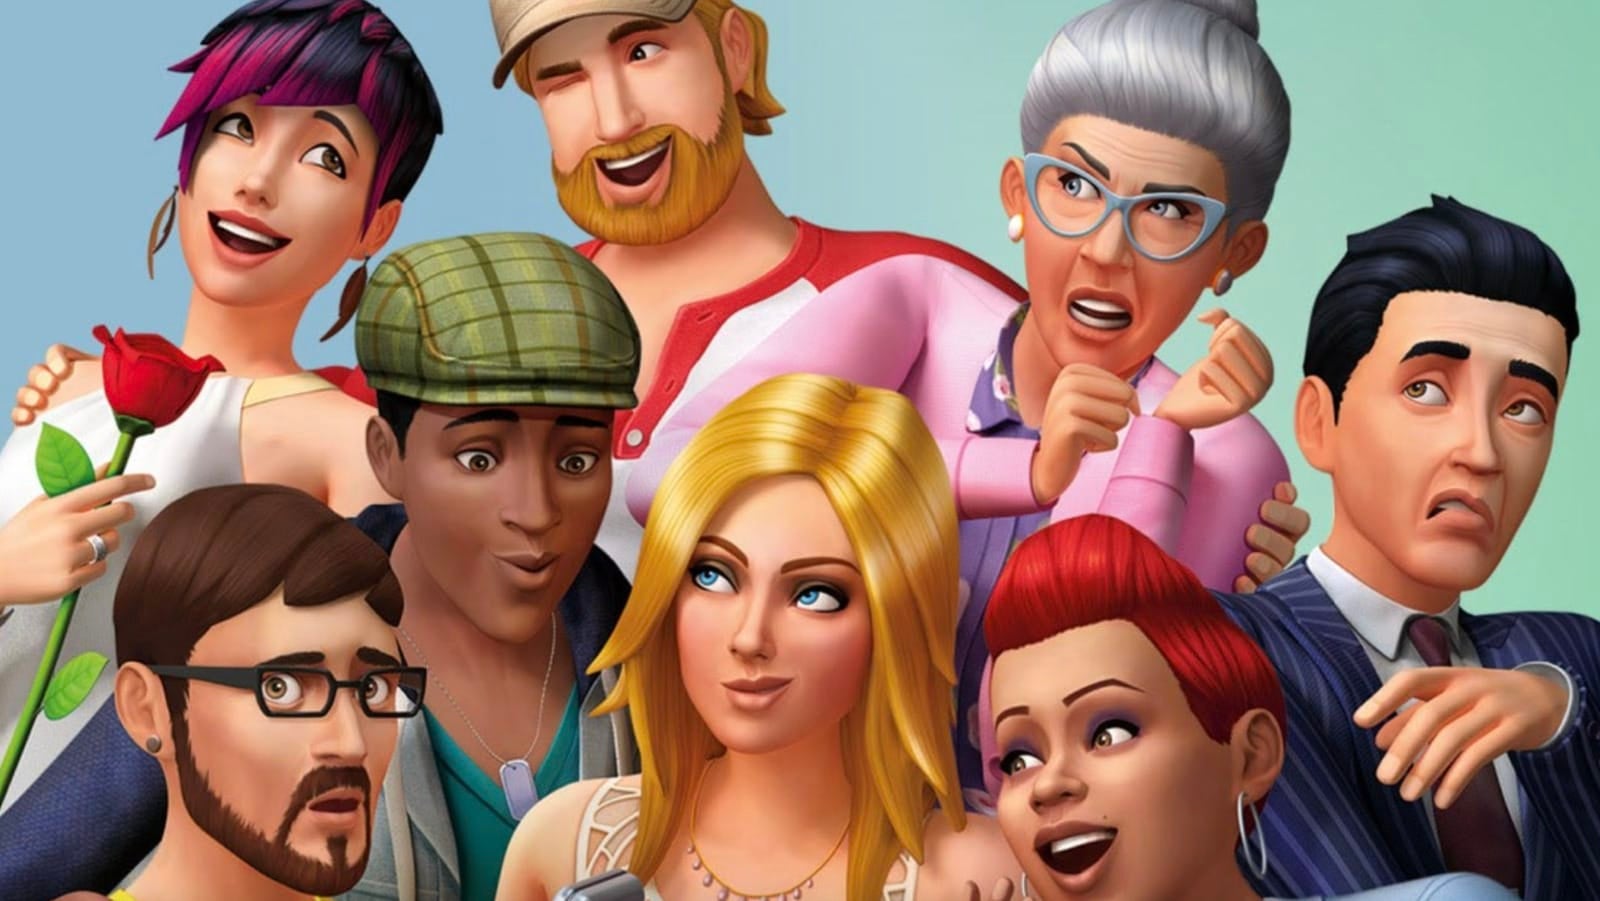 The Sims สร้างเป็นหนัง มาร์โกต์ ร็อบบี้ Margot Robbie